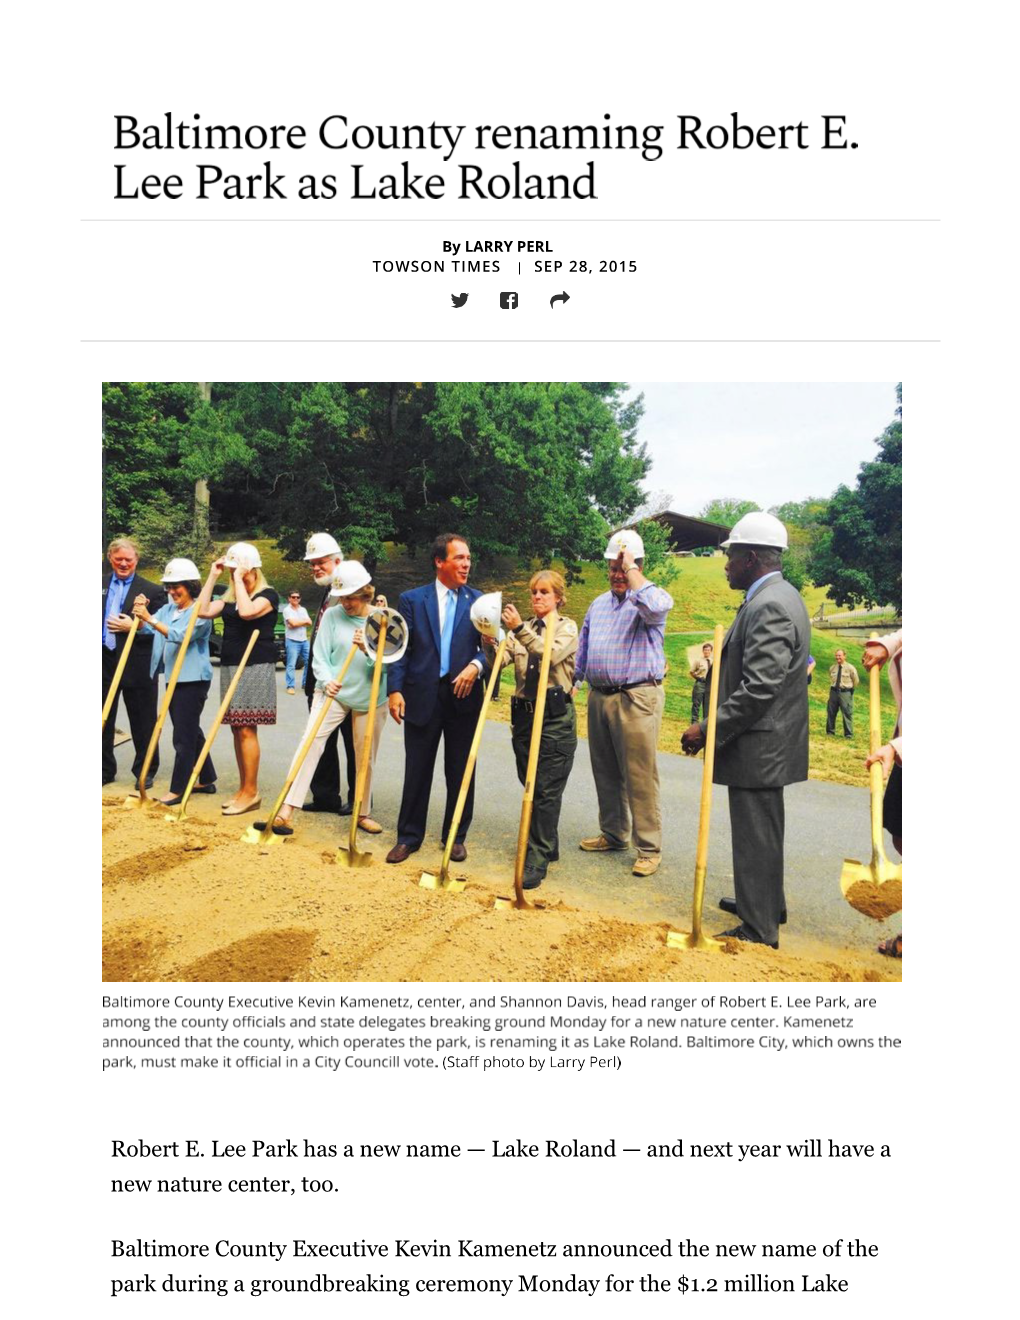 Baltimore County Renaming Robert E. Lee Park 2015